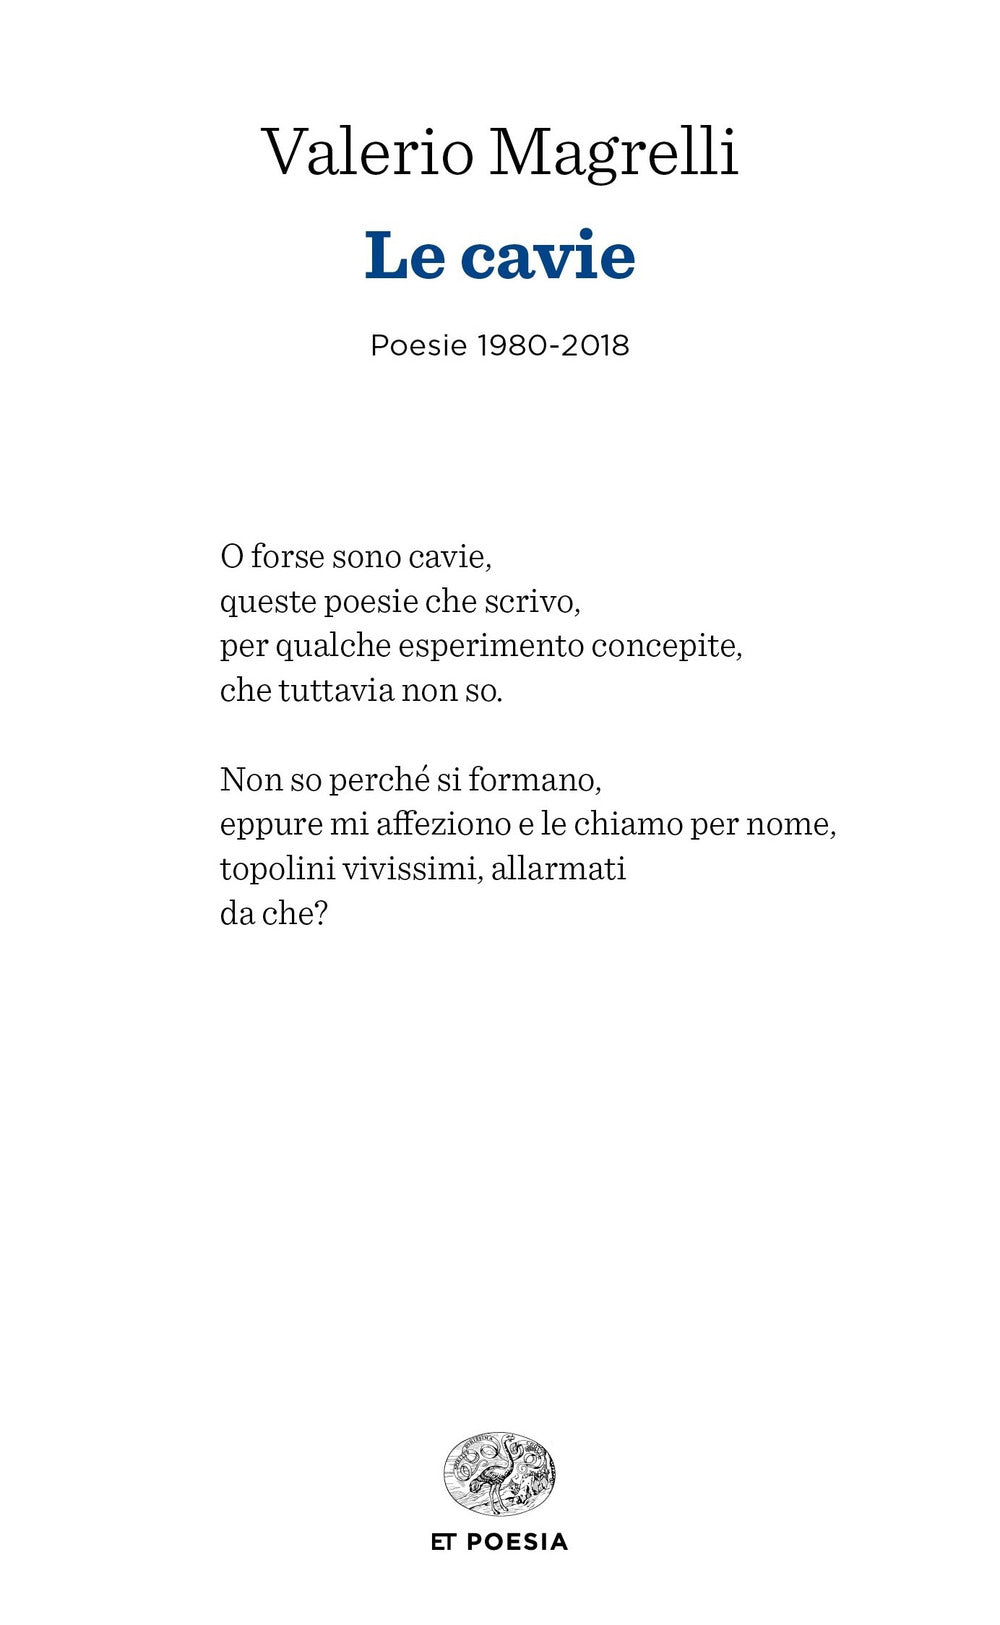 Le cavie. Poesie 1980-2018.